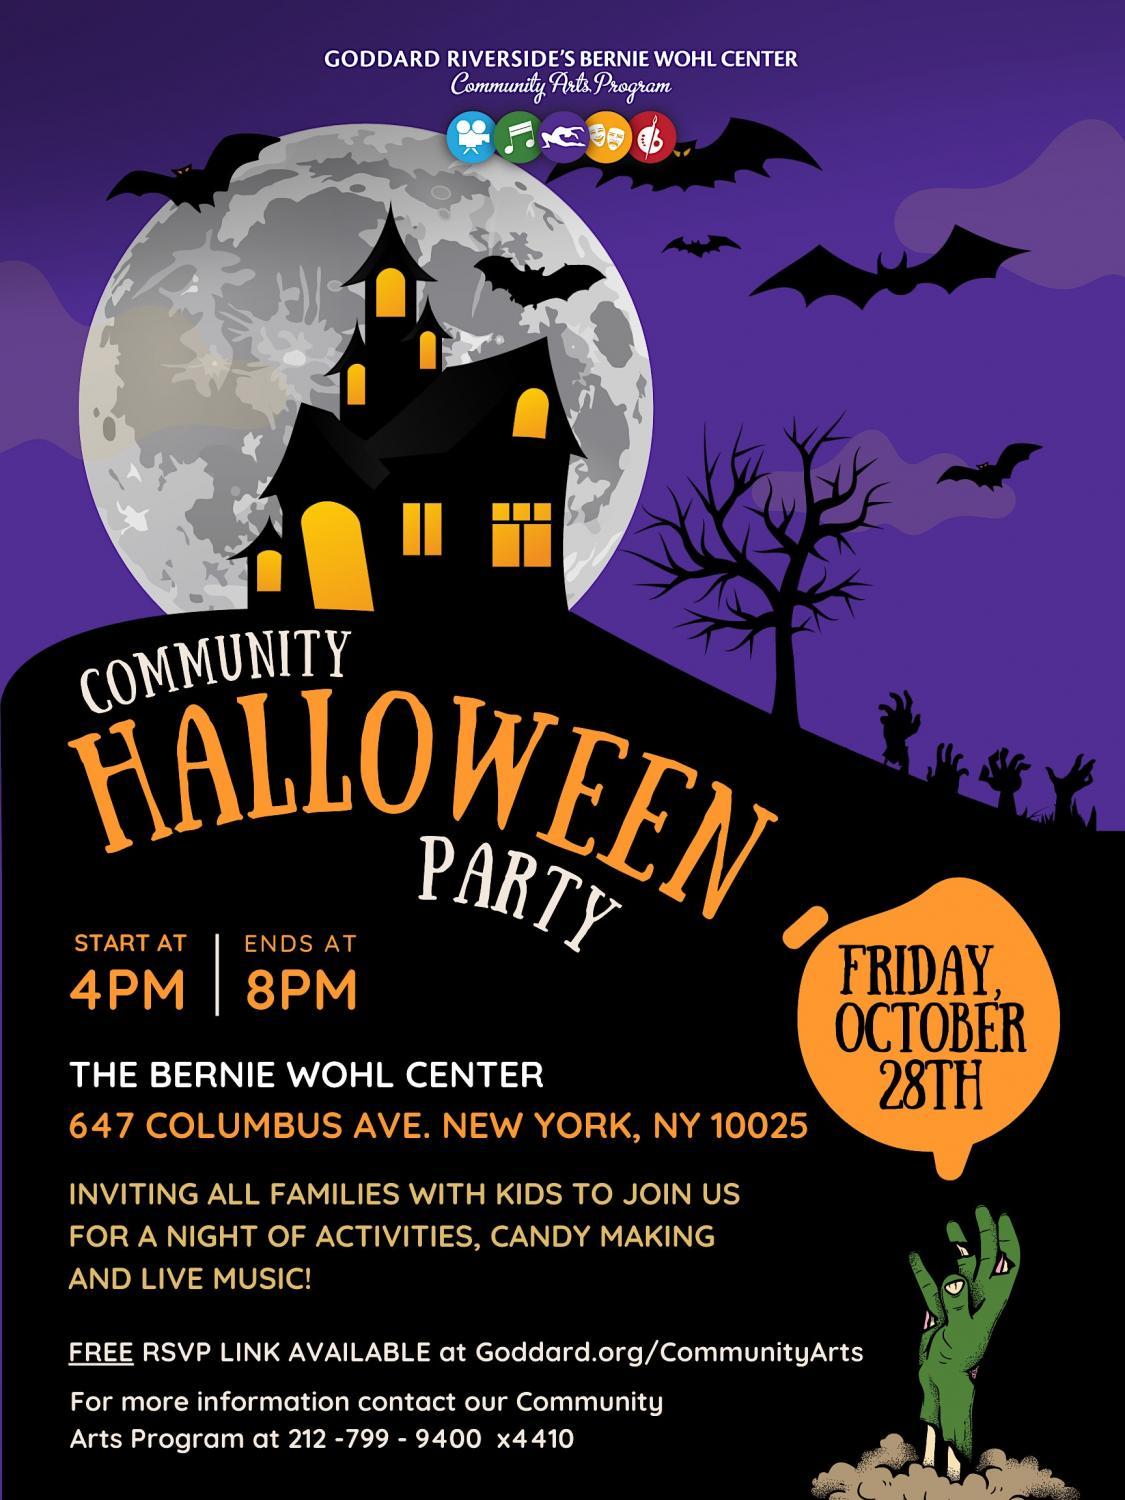 Community Halloween Party
Fri Oct 28, 4:00 PM - Fri Oct 28, 8:00 PM
in 11 days